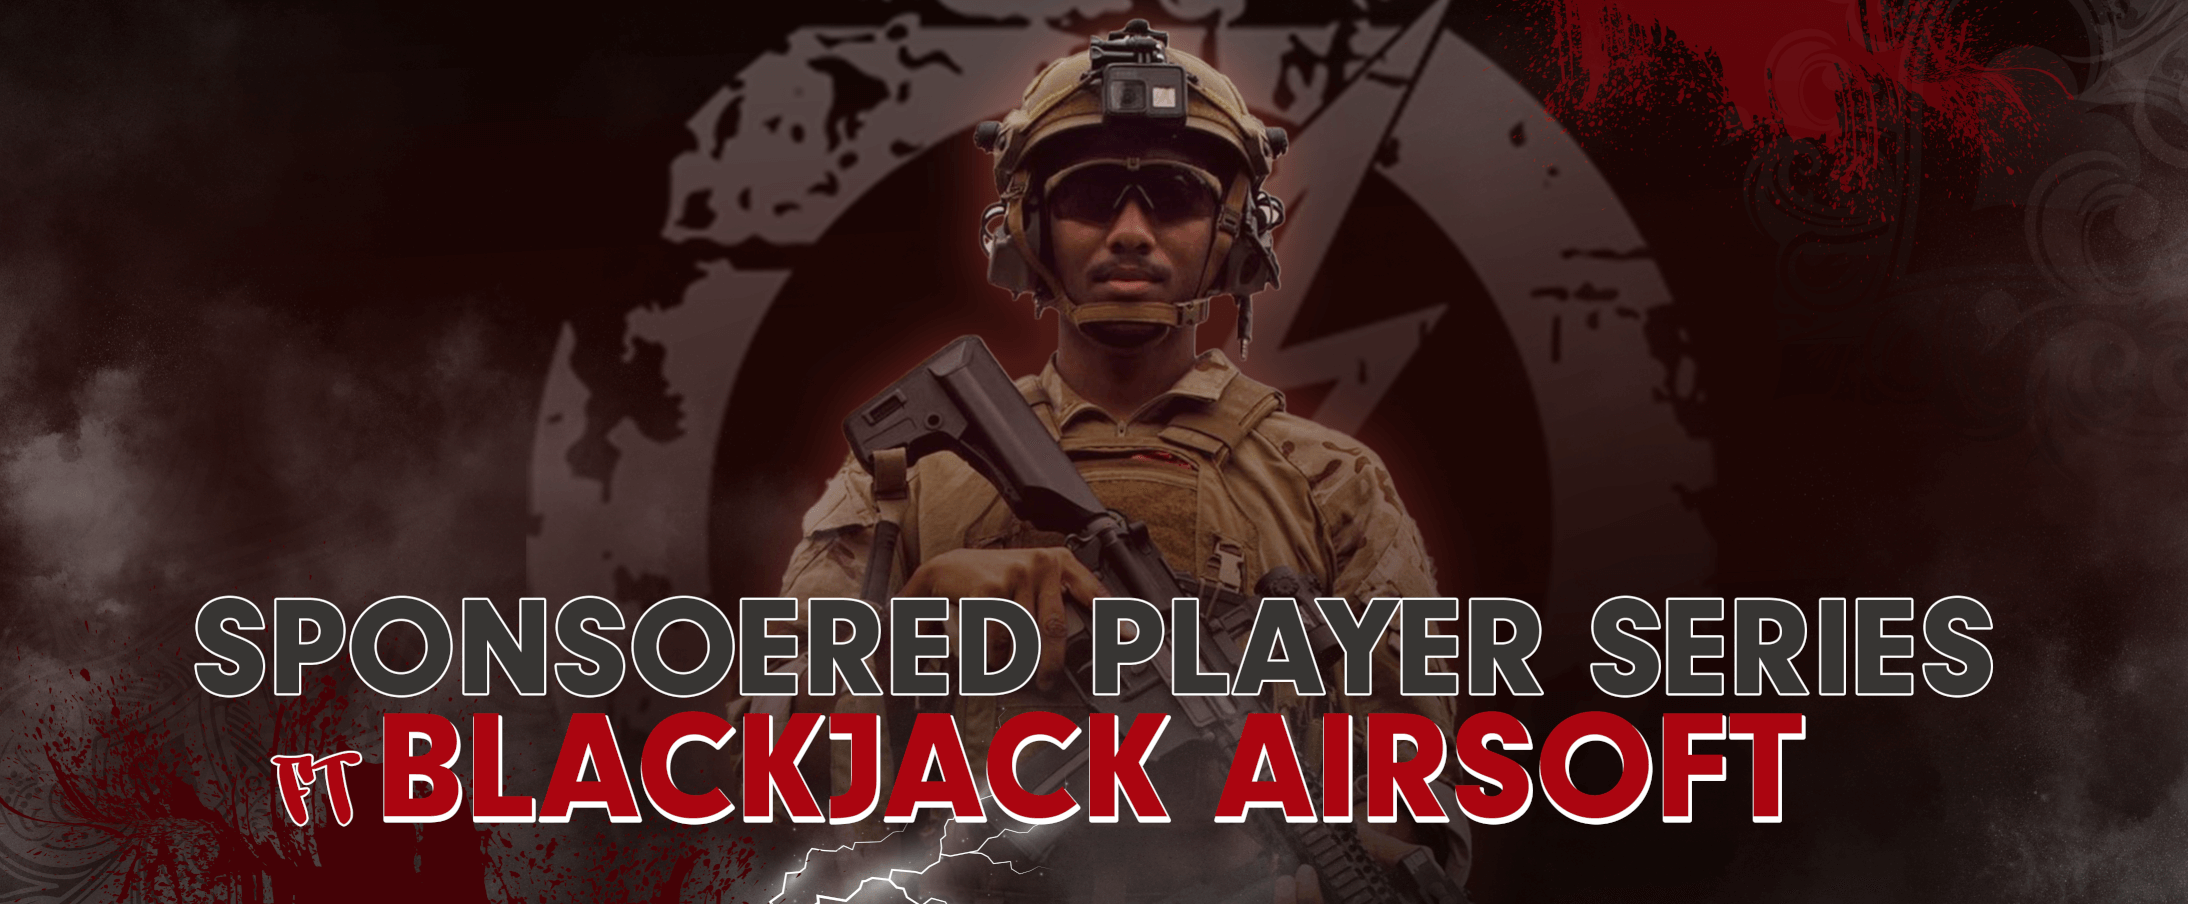 Meet Sponsored Player: Blackjack Airsoft